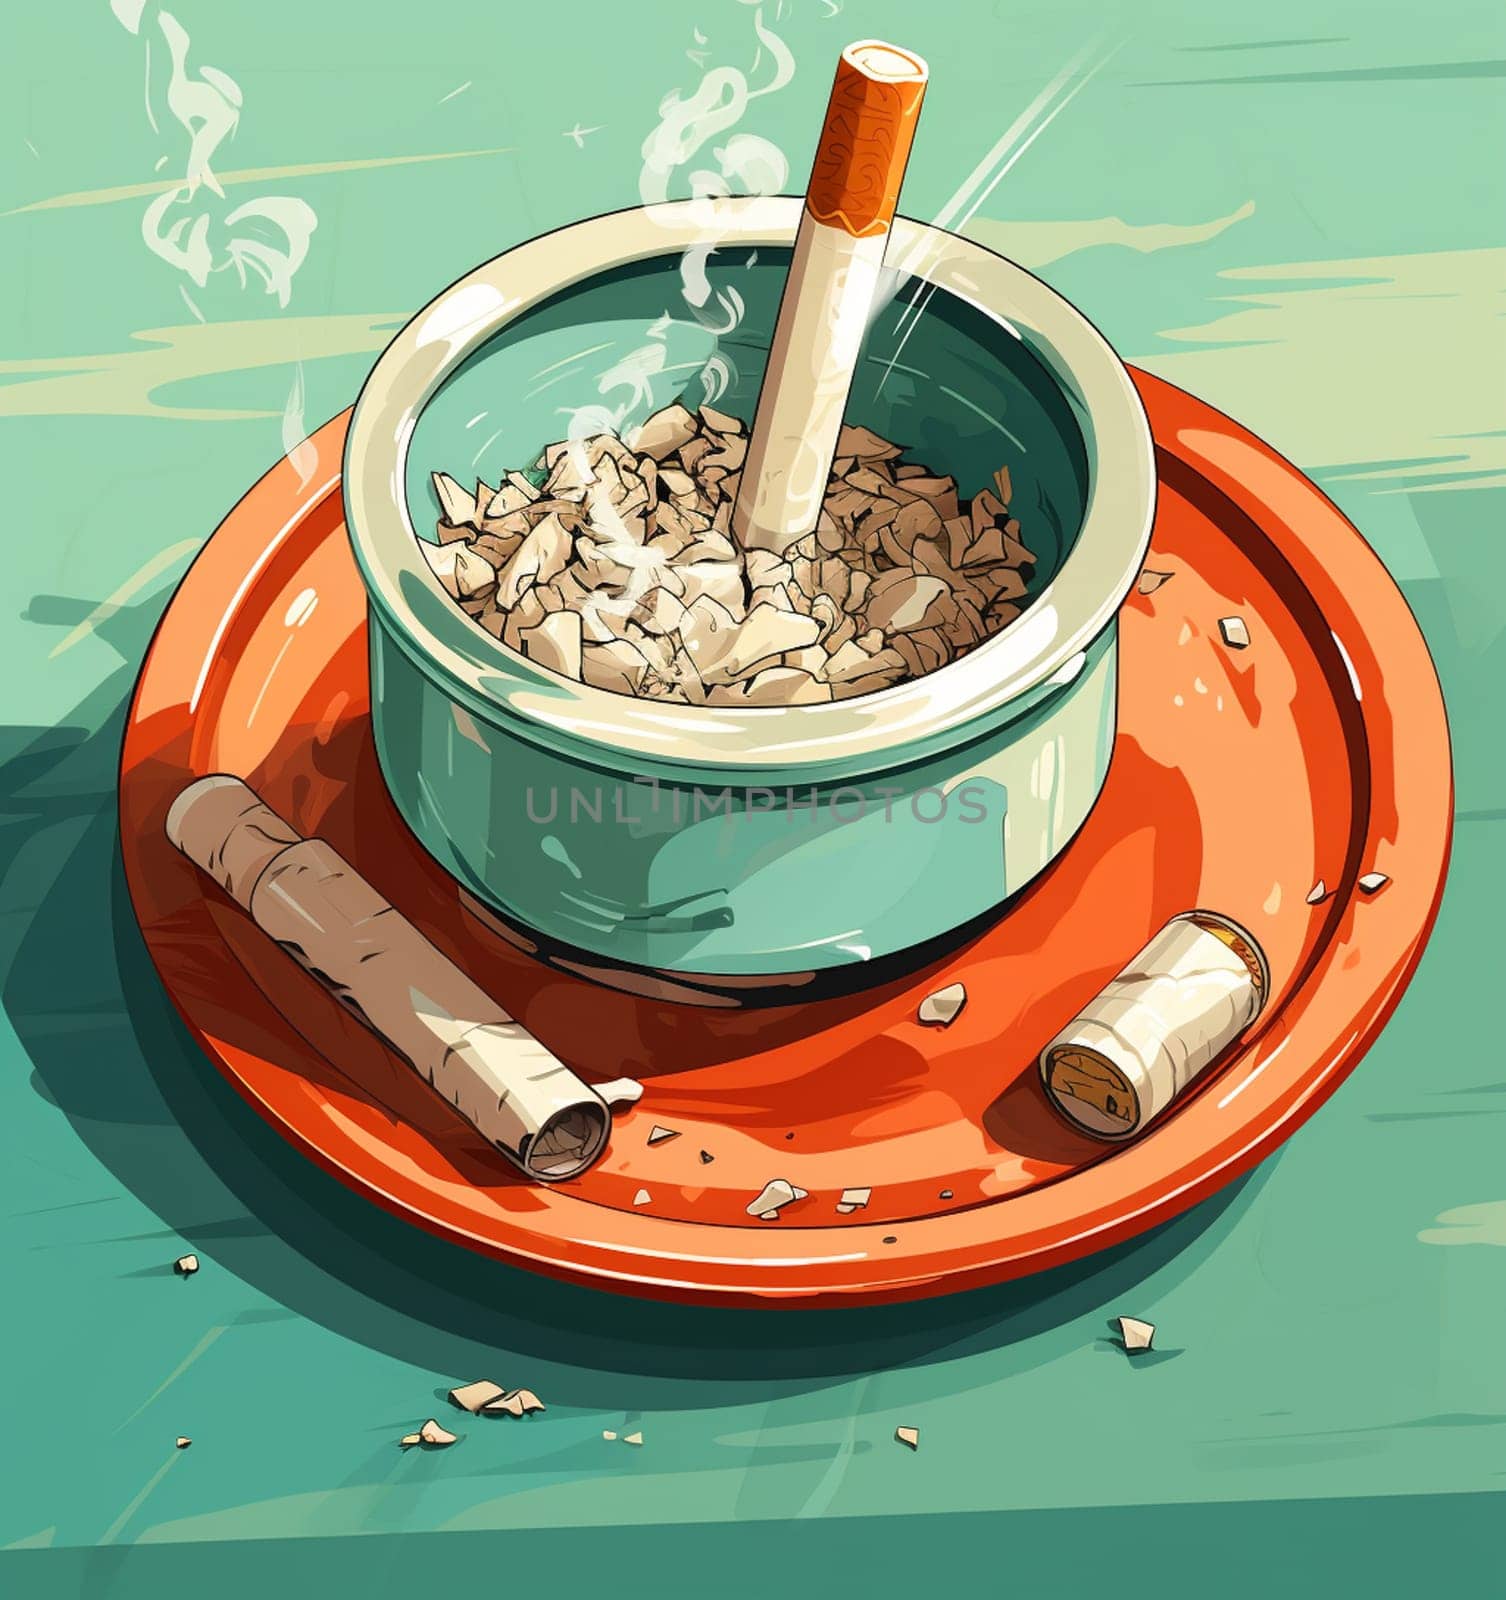 Ceramic ashtray with smokes cigarettes. No smoking concept. by Andelov13